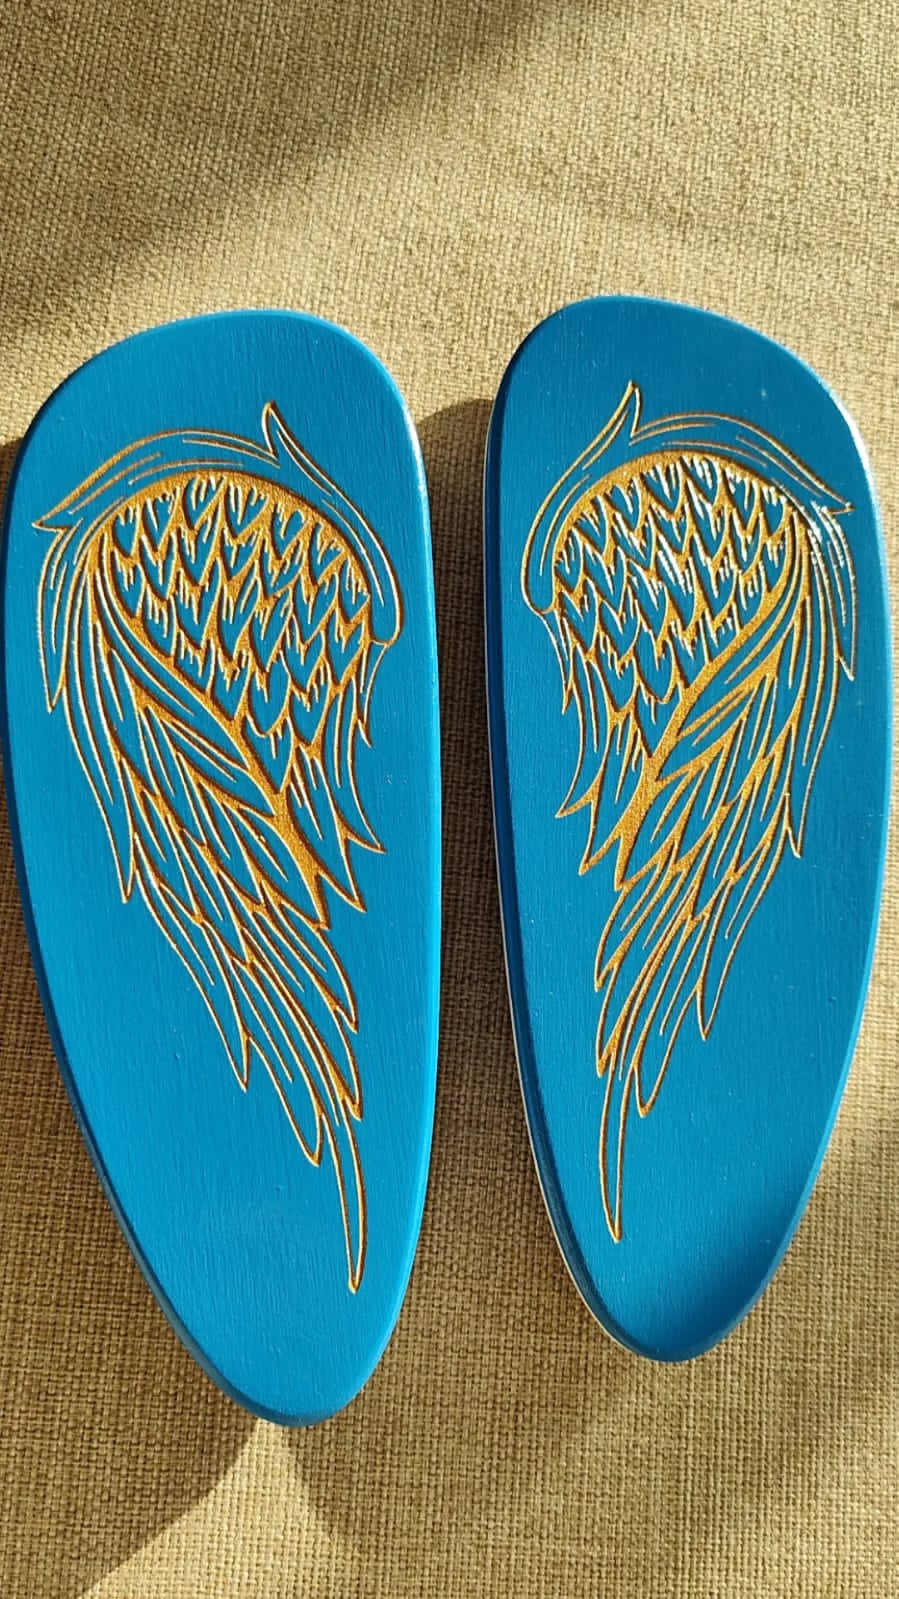 Sadhu board -Angel Wings, Balance board, Yoga board, Nails board, 10 mm